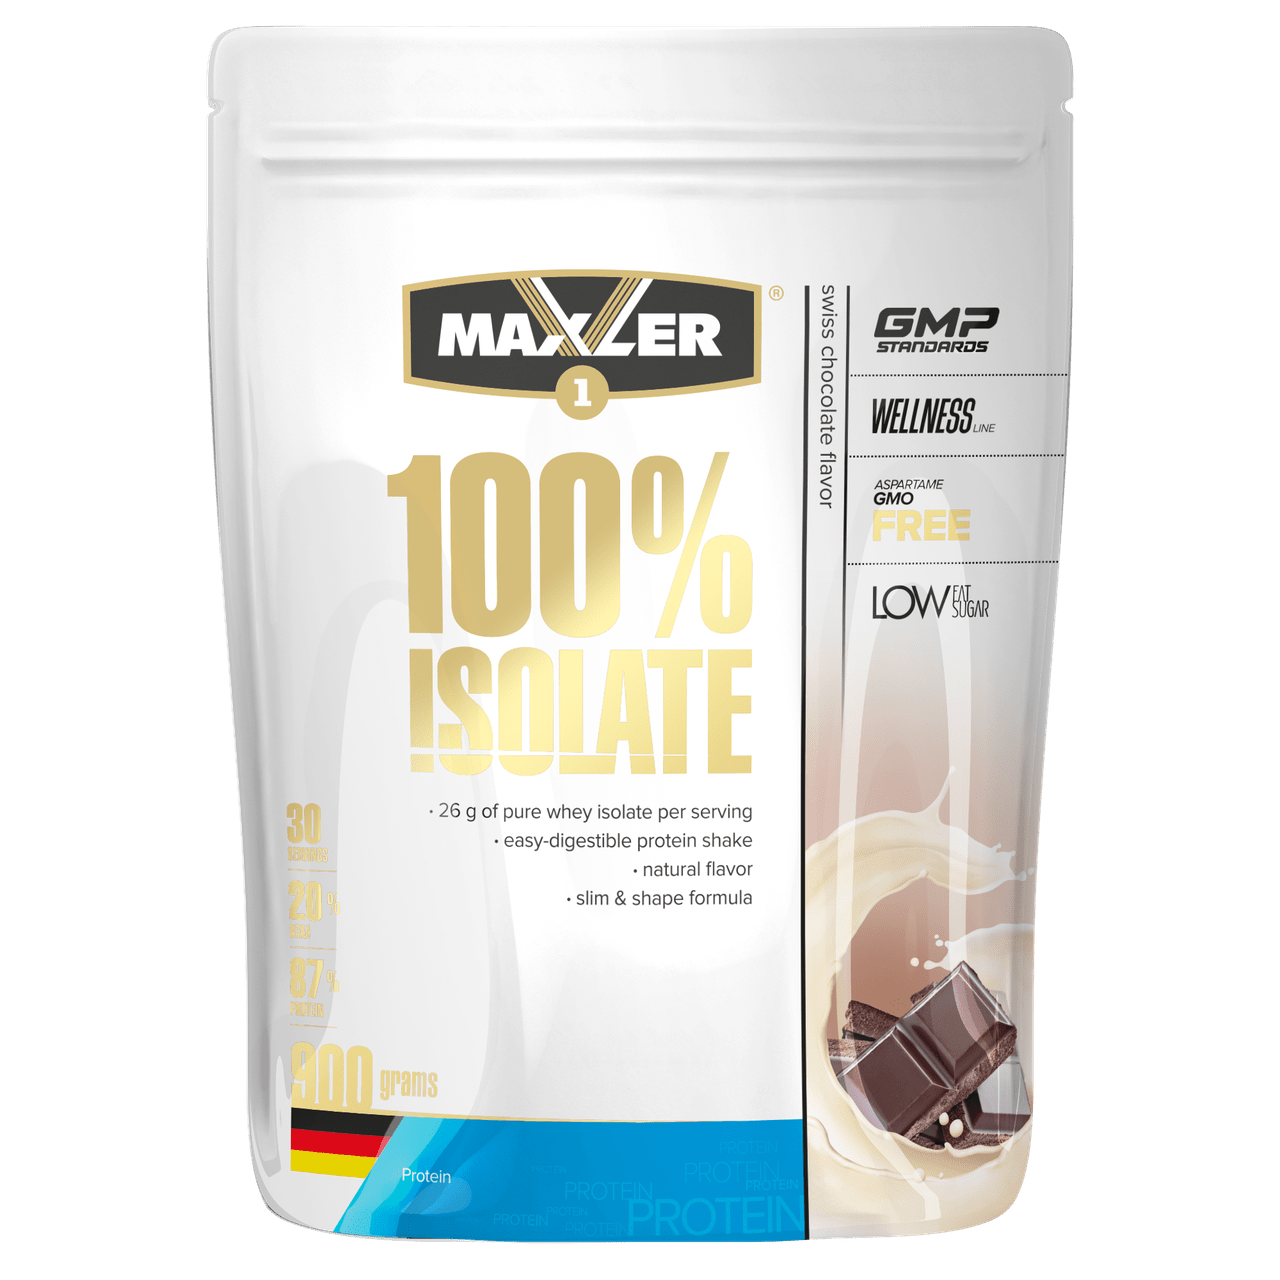 Сывороточный протеин изолят Maxler 100% Isolate (450 г) макслер swiss chocolate,  ml, Maxler. Whey Isolate. Lean muscle mass Weight Loss recovery Anti-catabolic properties 